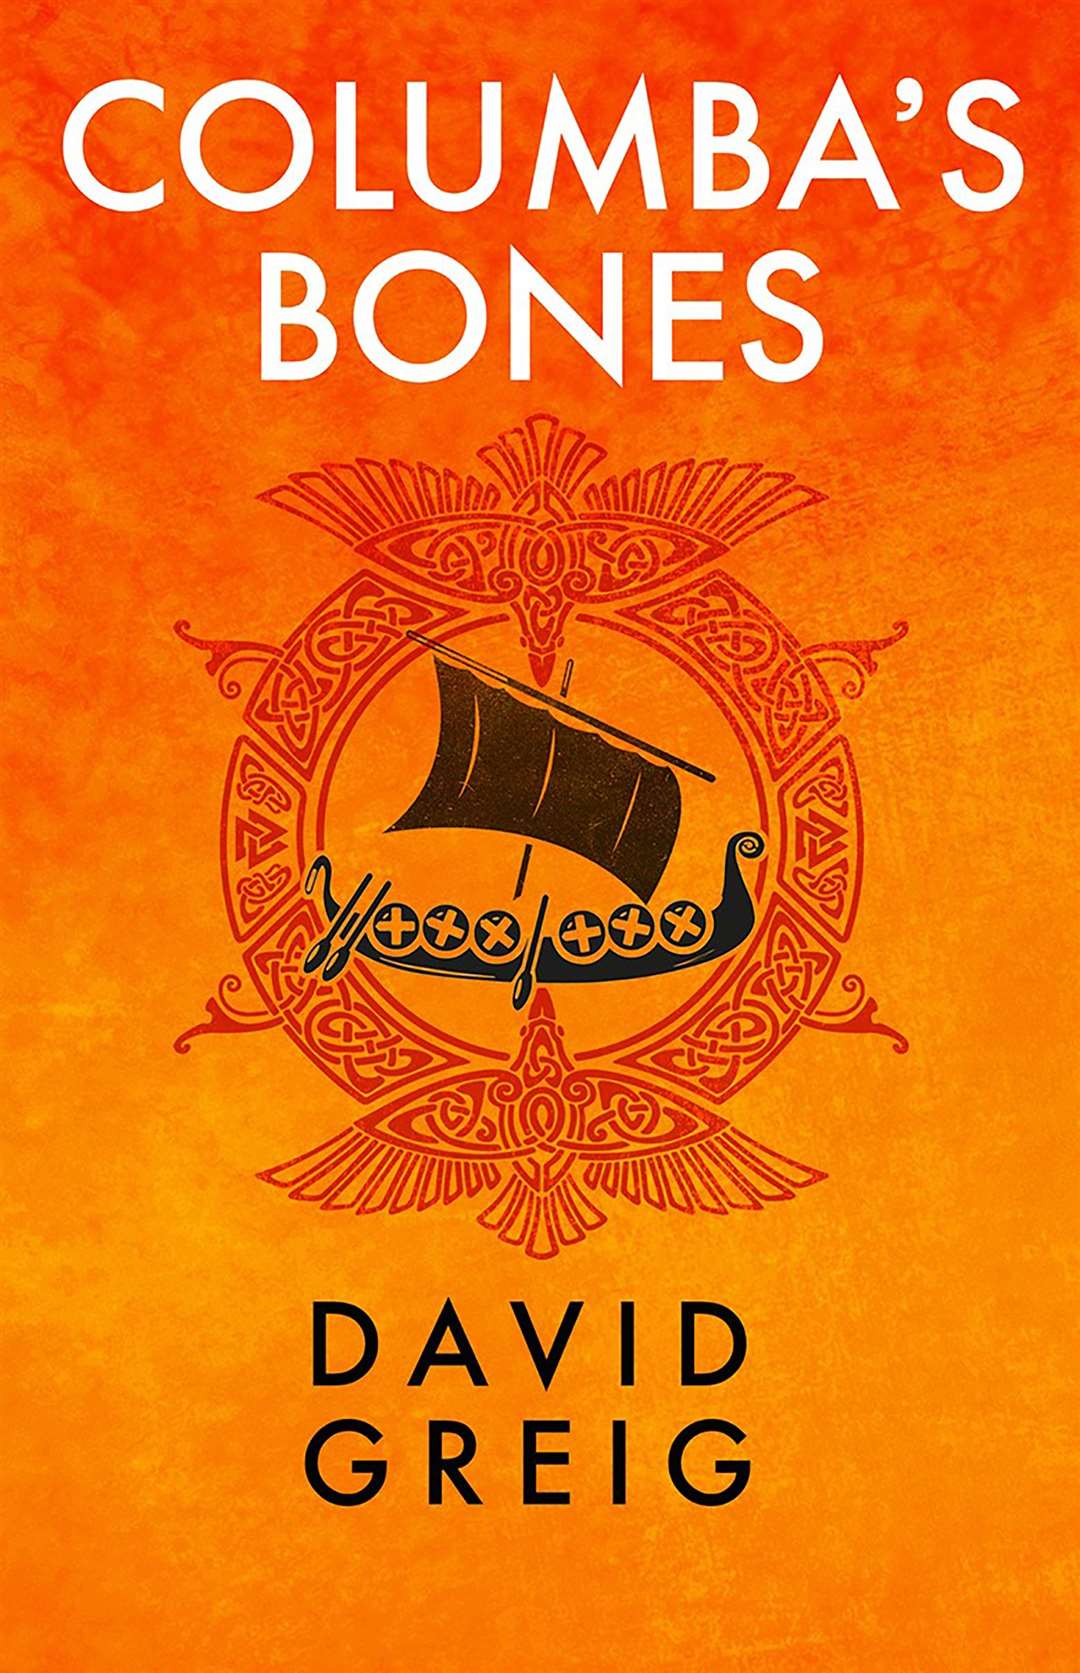 Columba's Bones by David Greig.